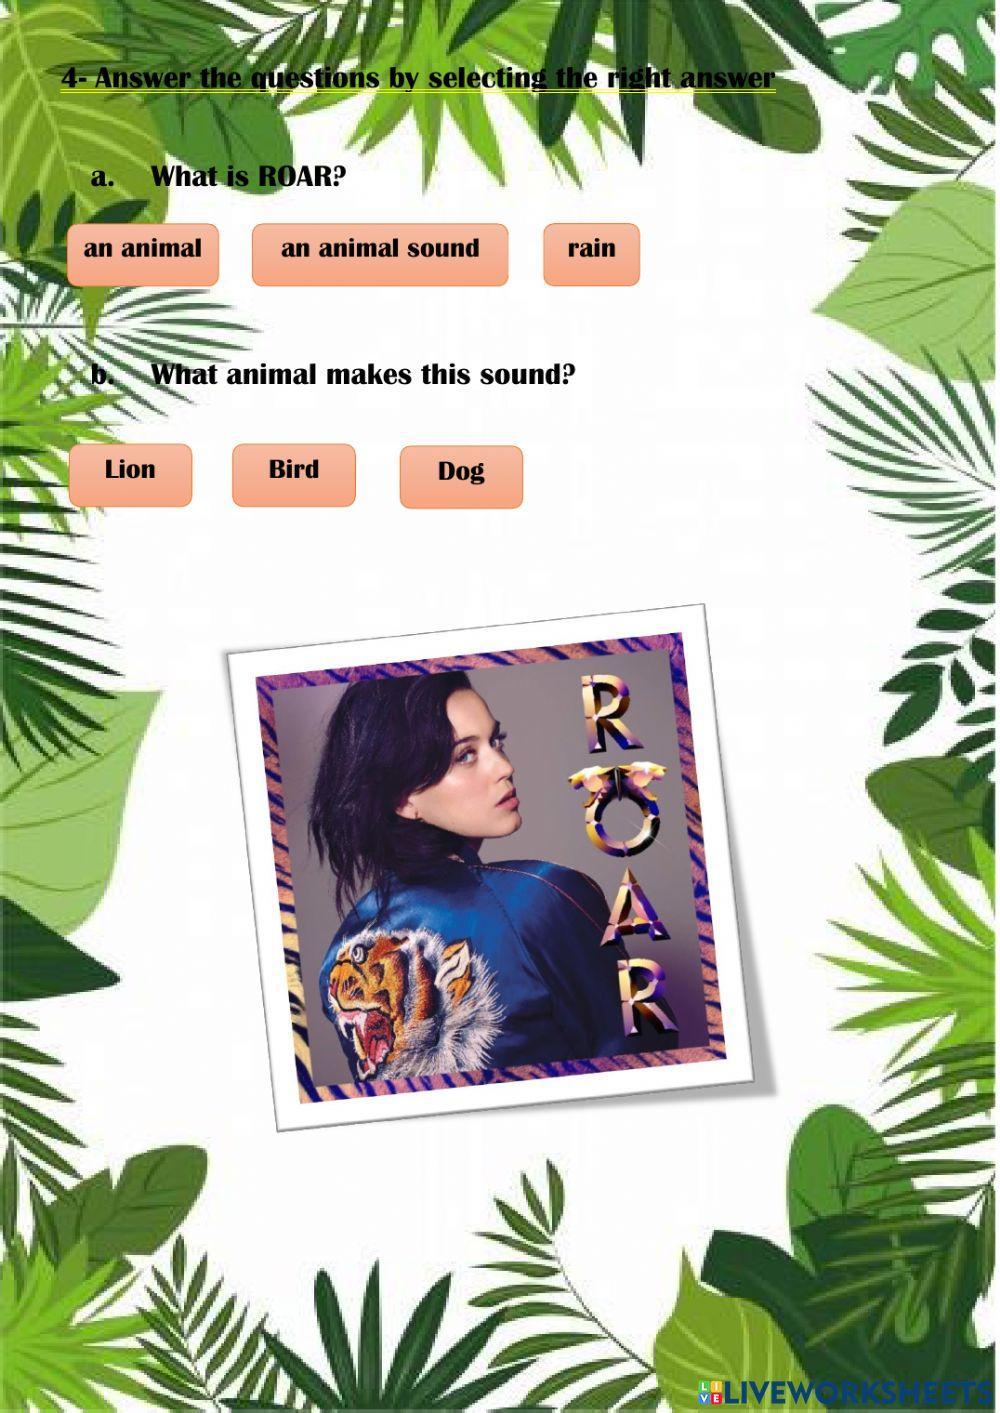 Song activity: Roar - Katy Perry